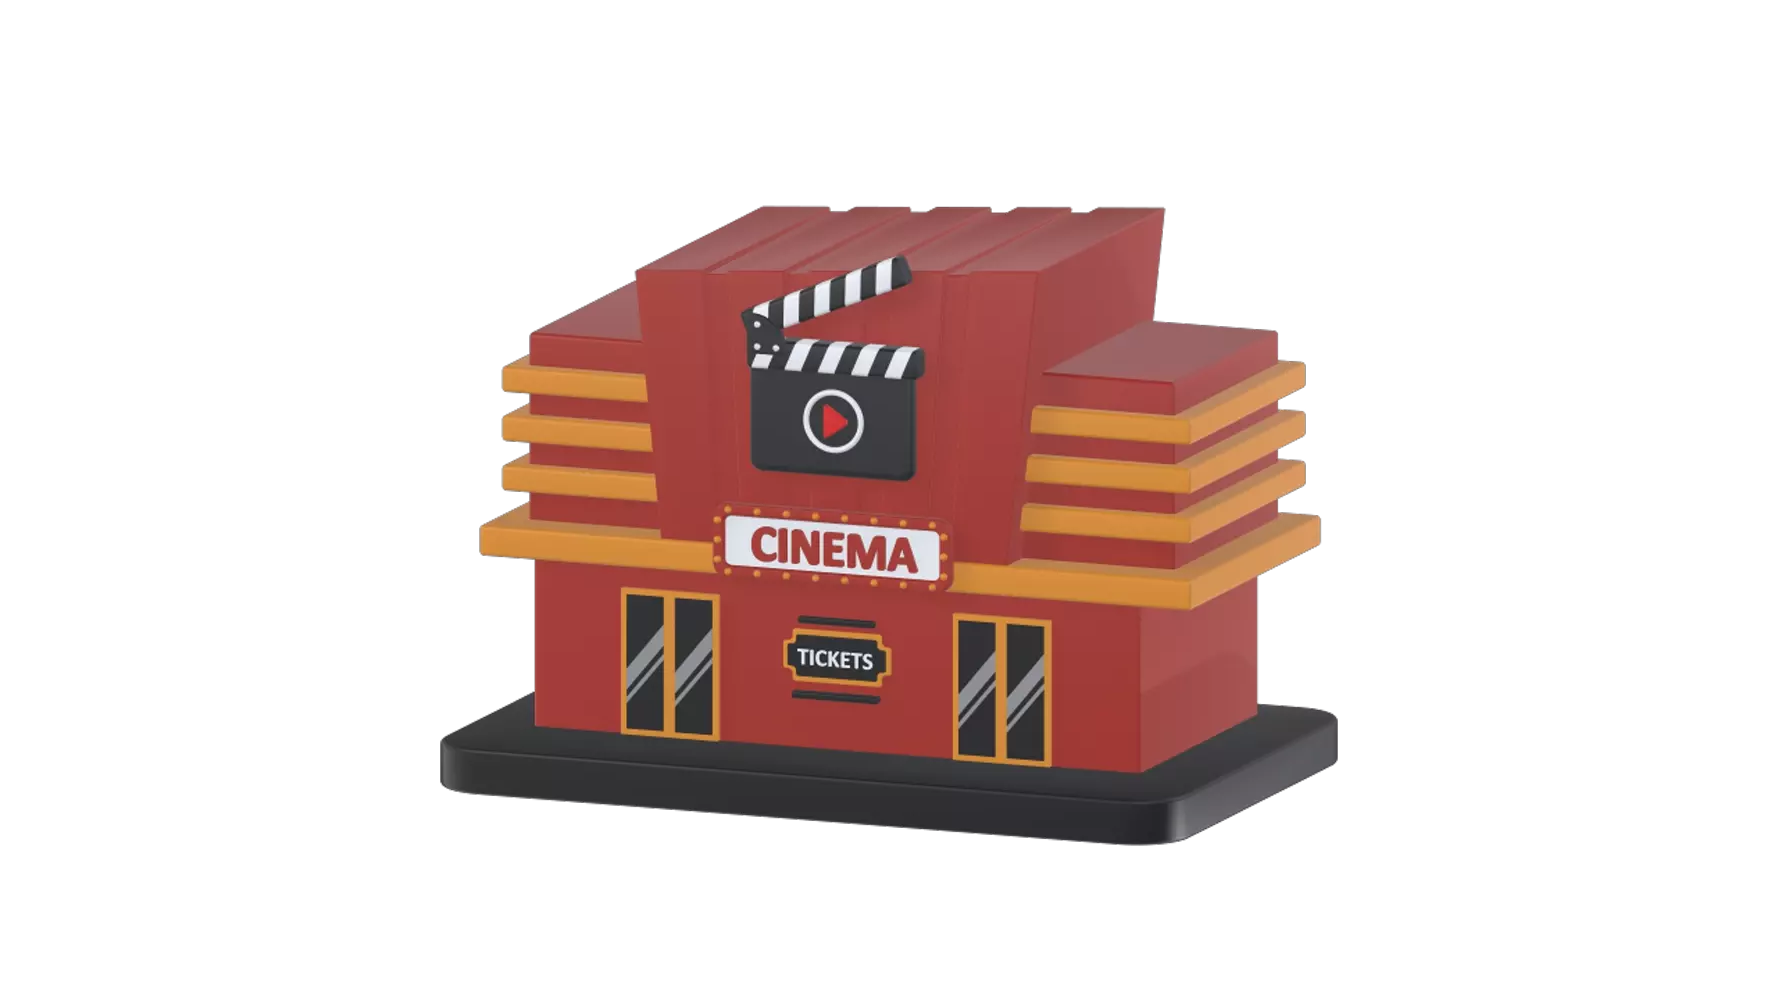 Cinema 3D Graphic